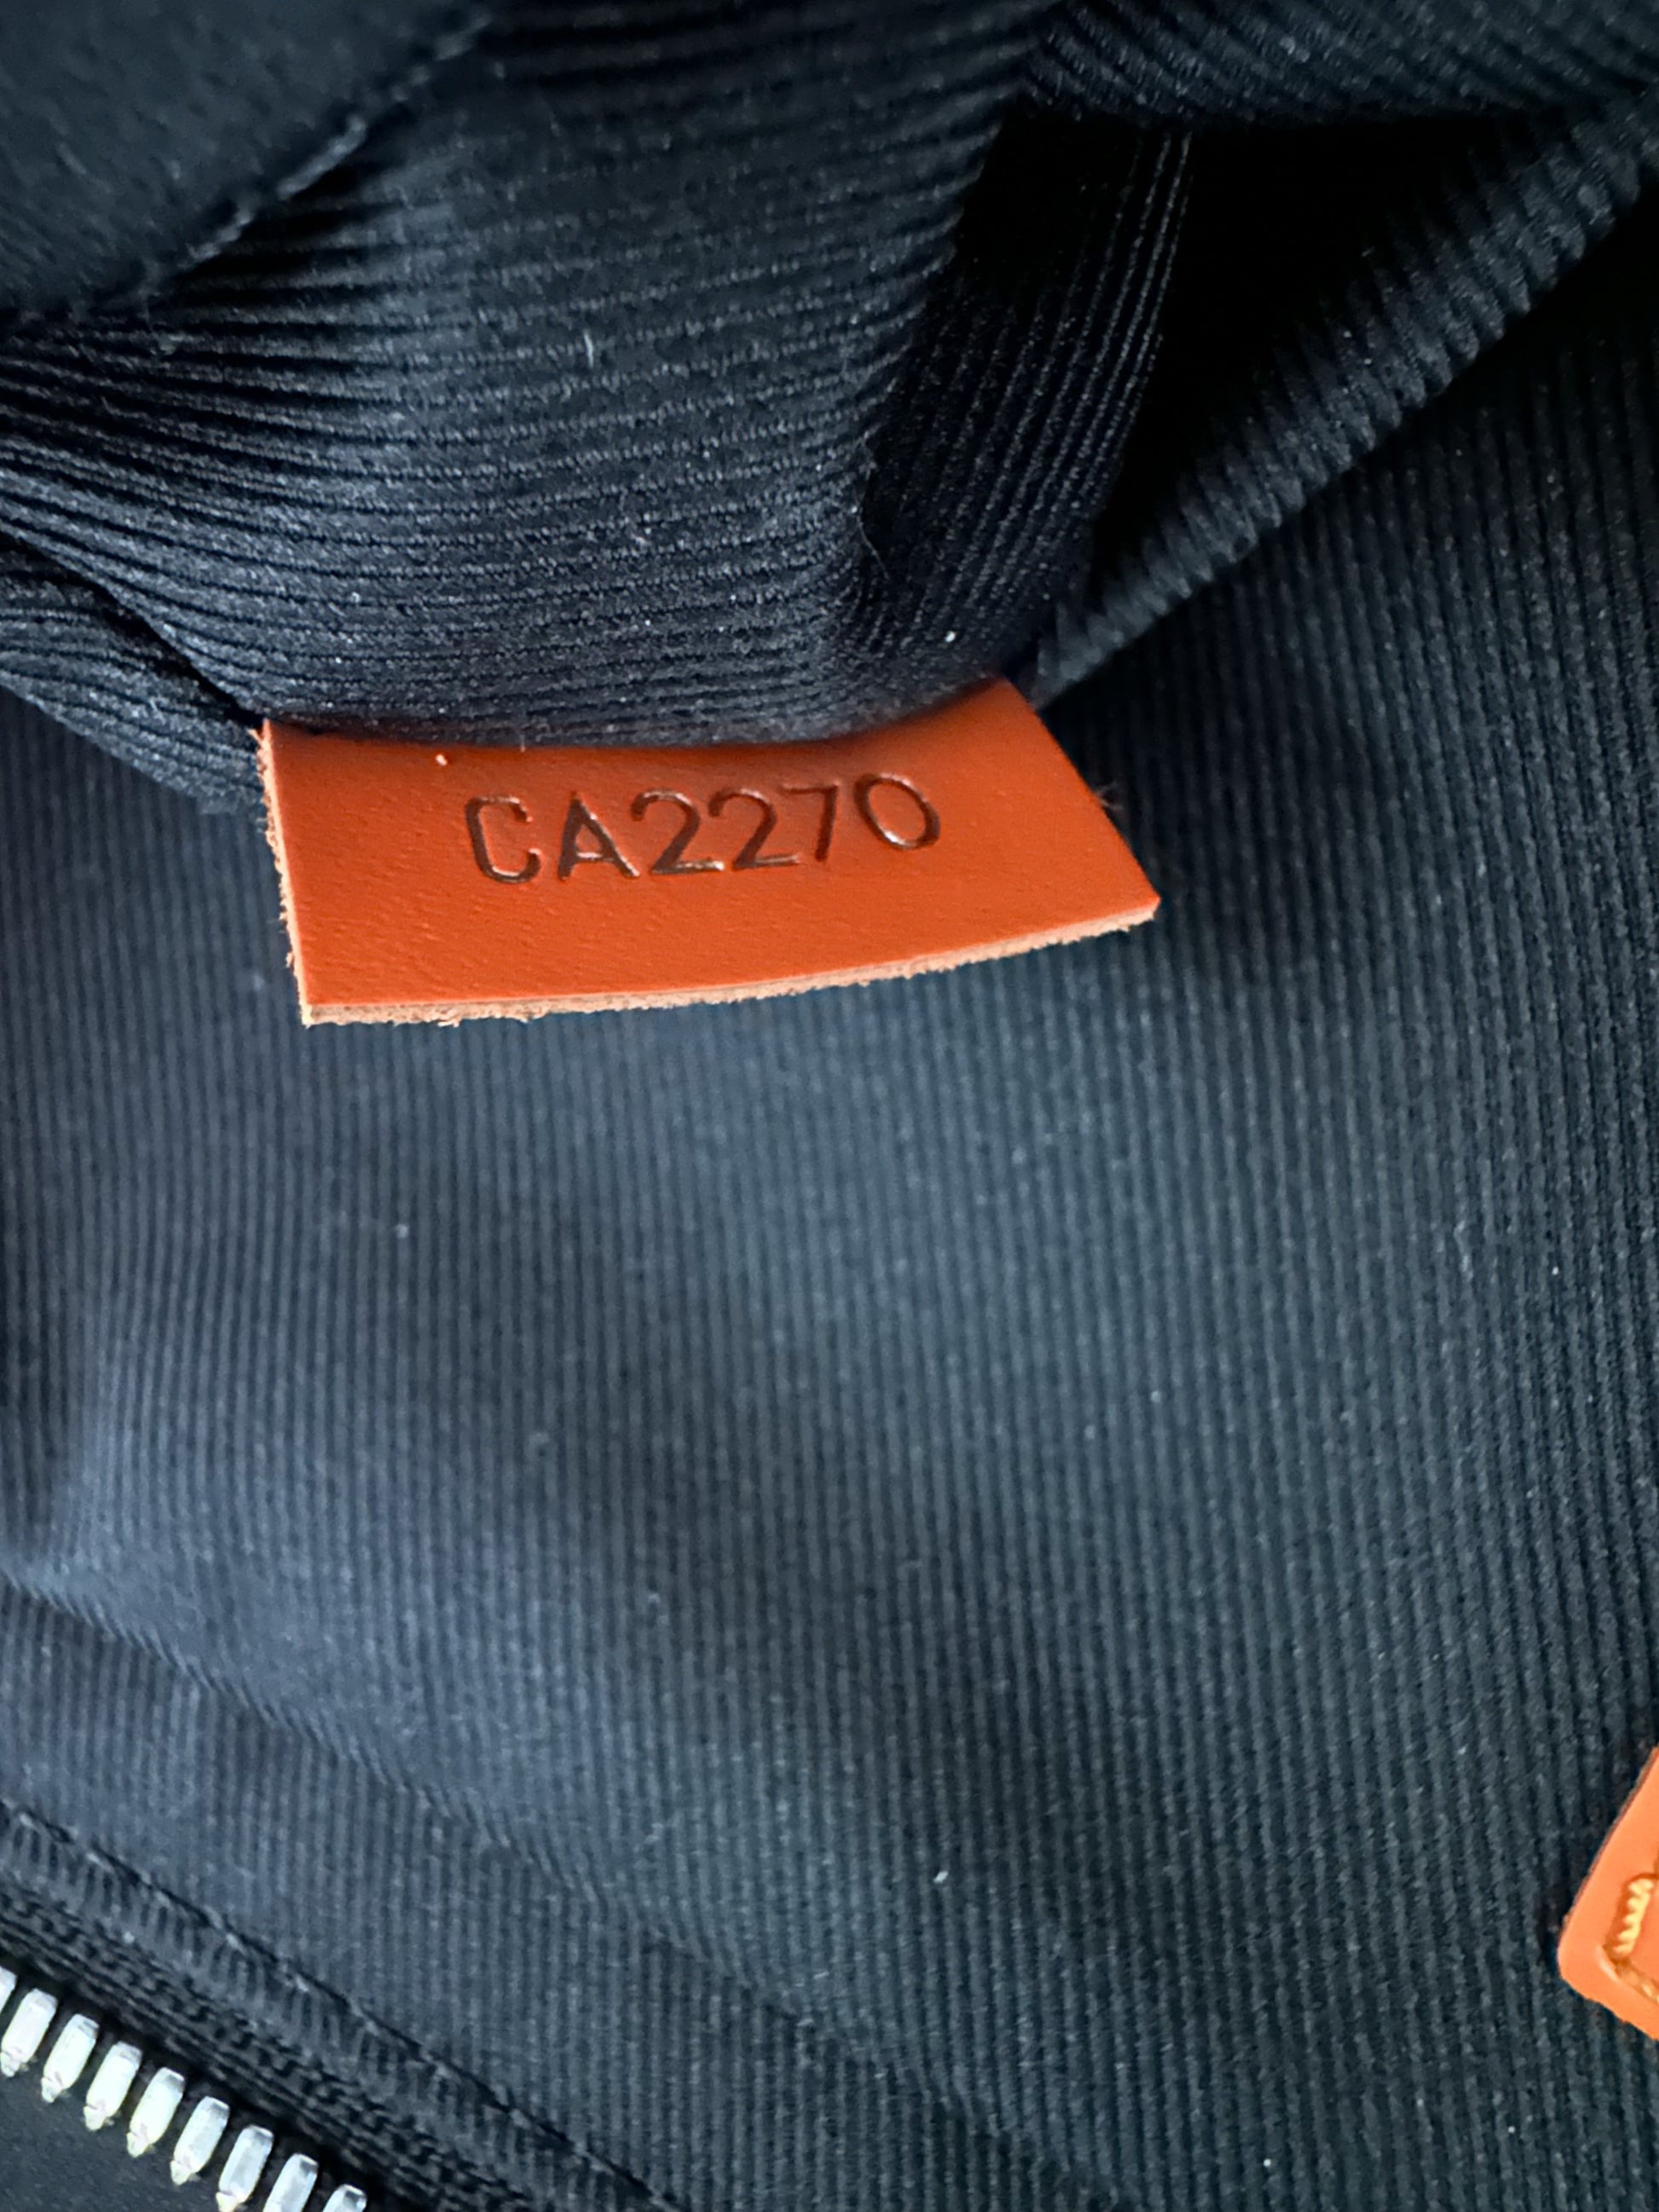 Louis Vuitton Orange Giant Damier Graphite Alpha Messenger Bag